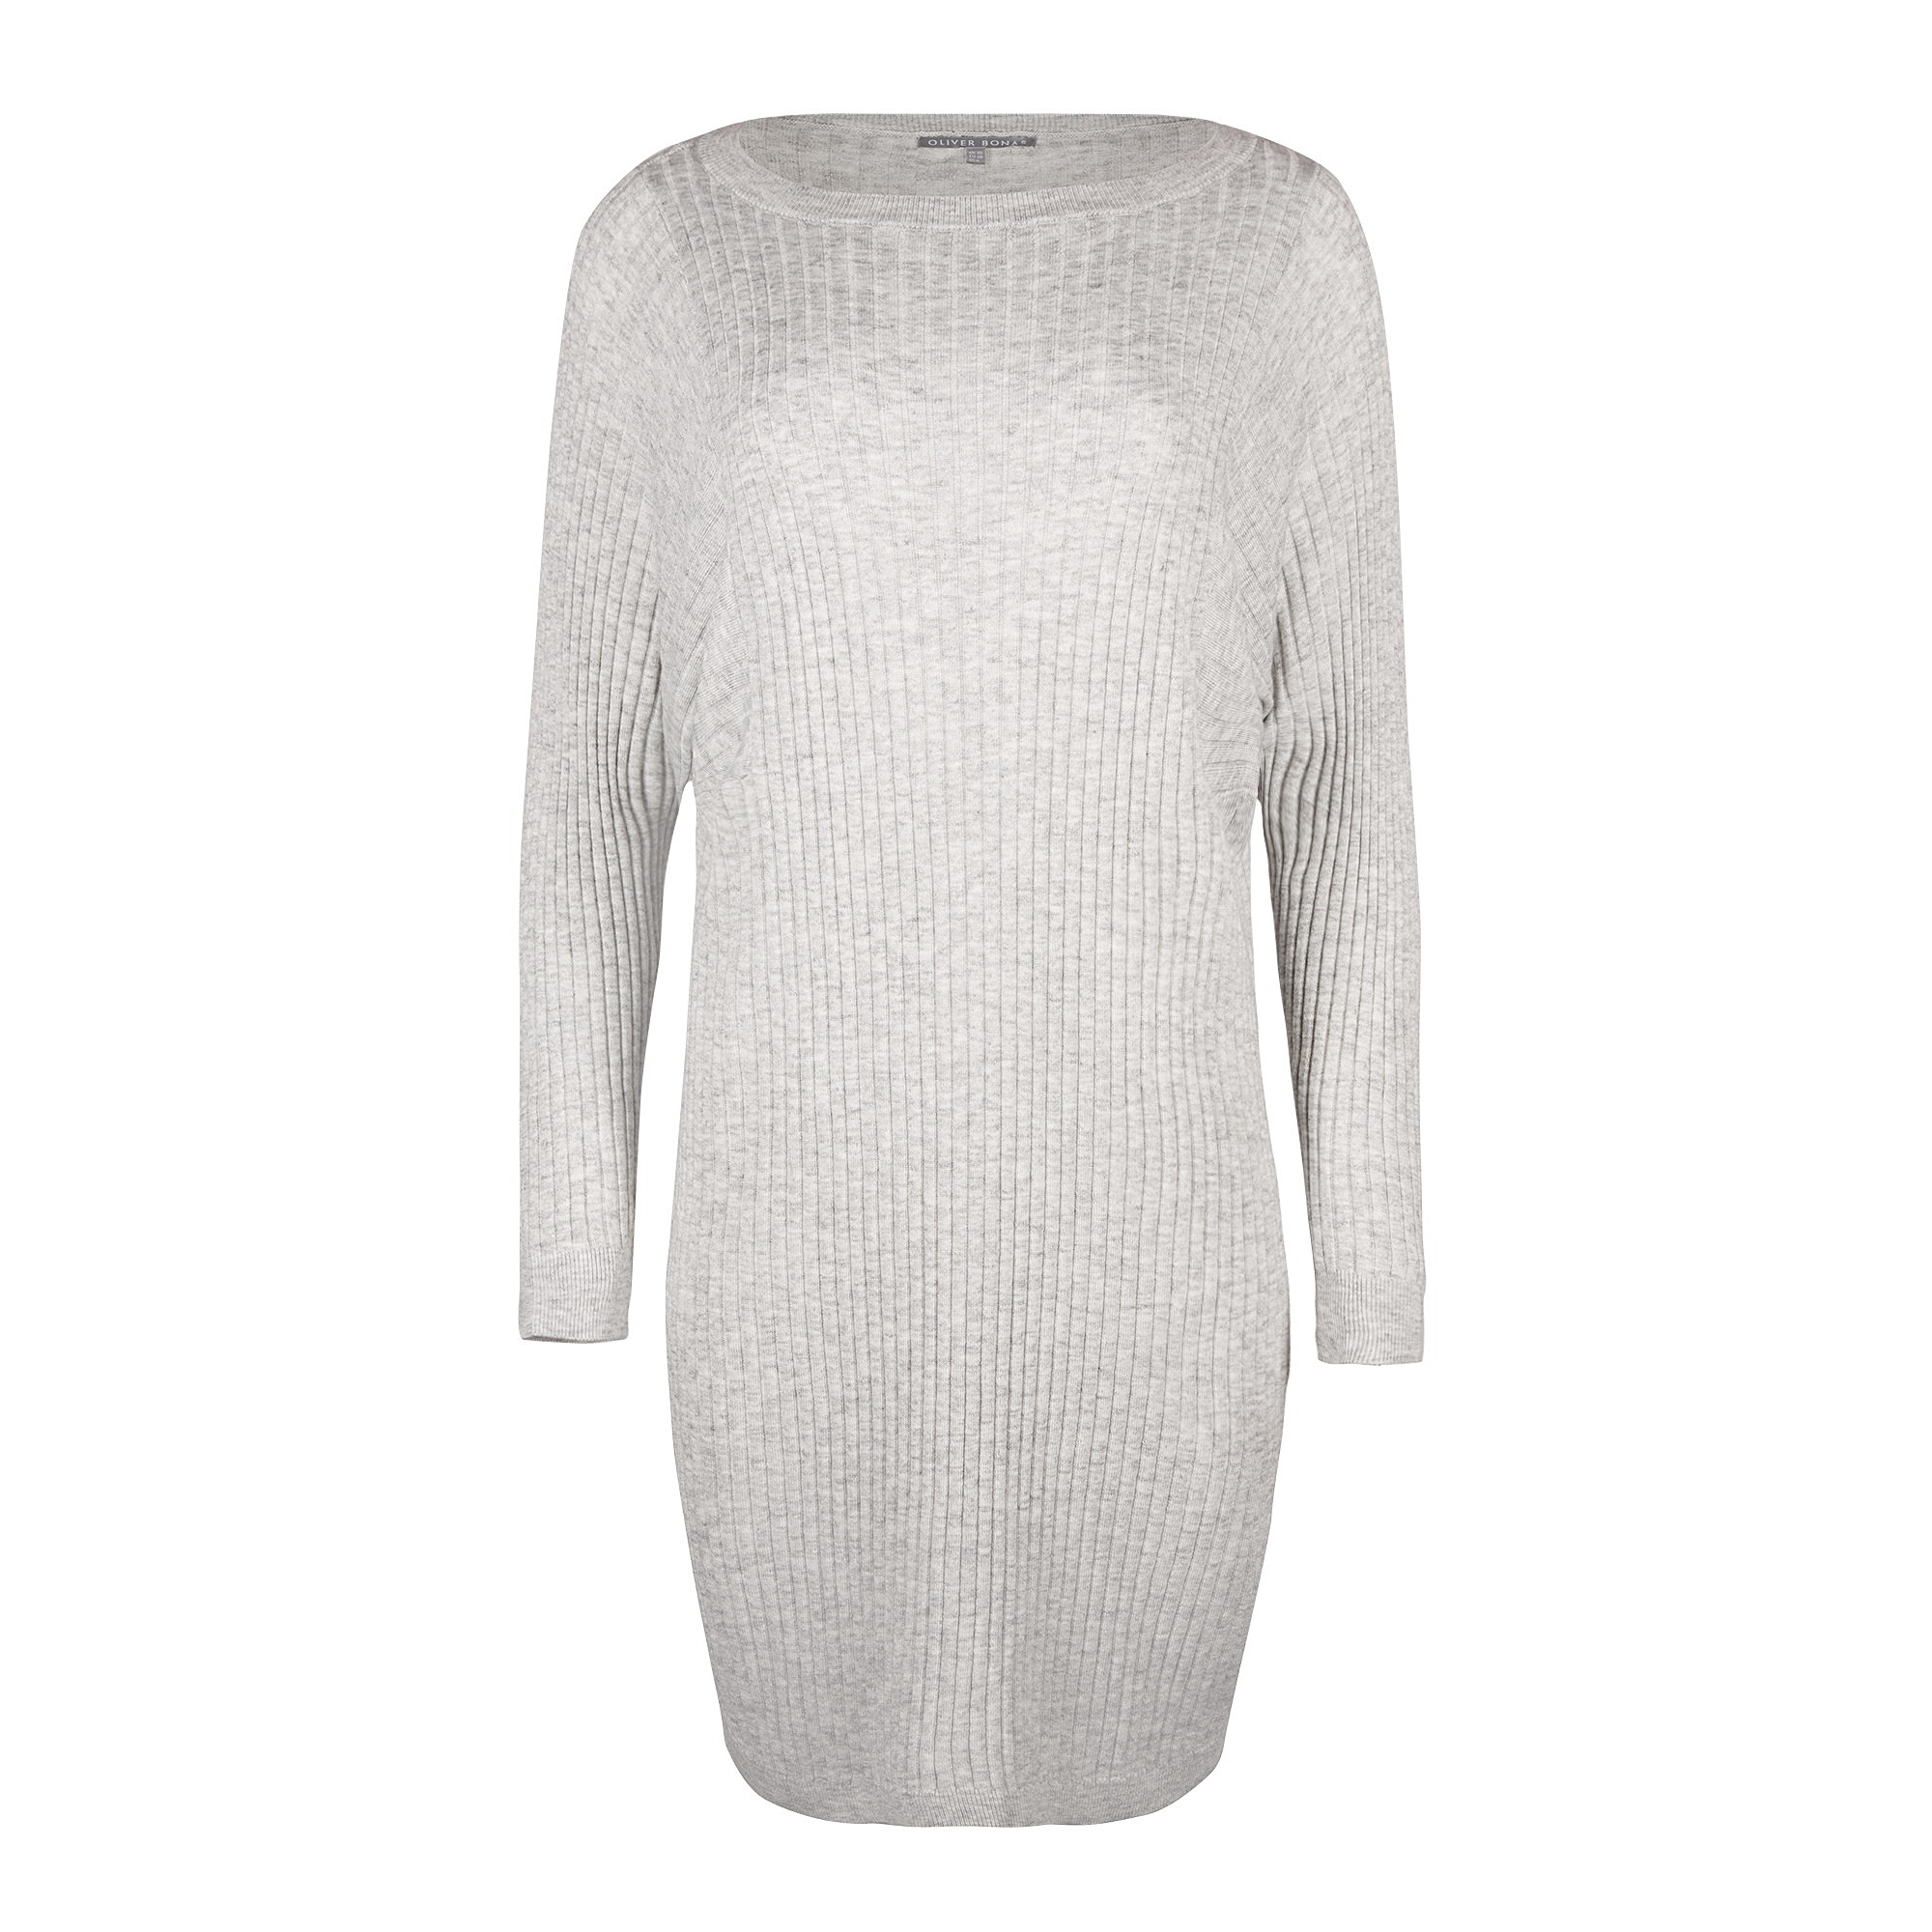 Oliver Bonas Women Flat Rib Grey Knitted Jumper Dress | eBay